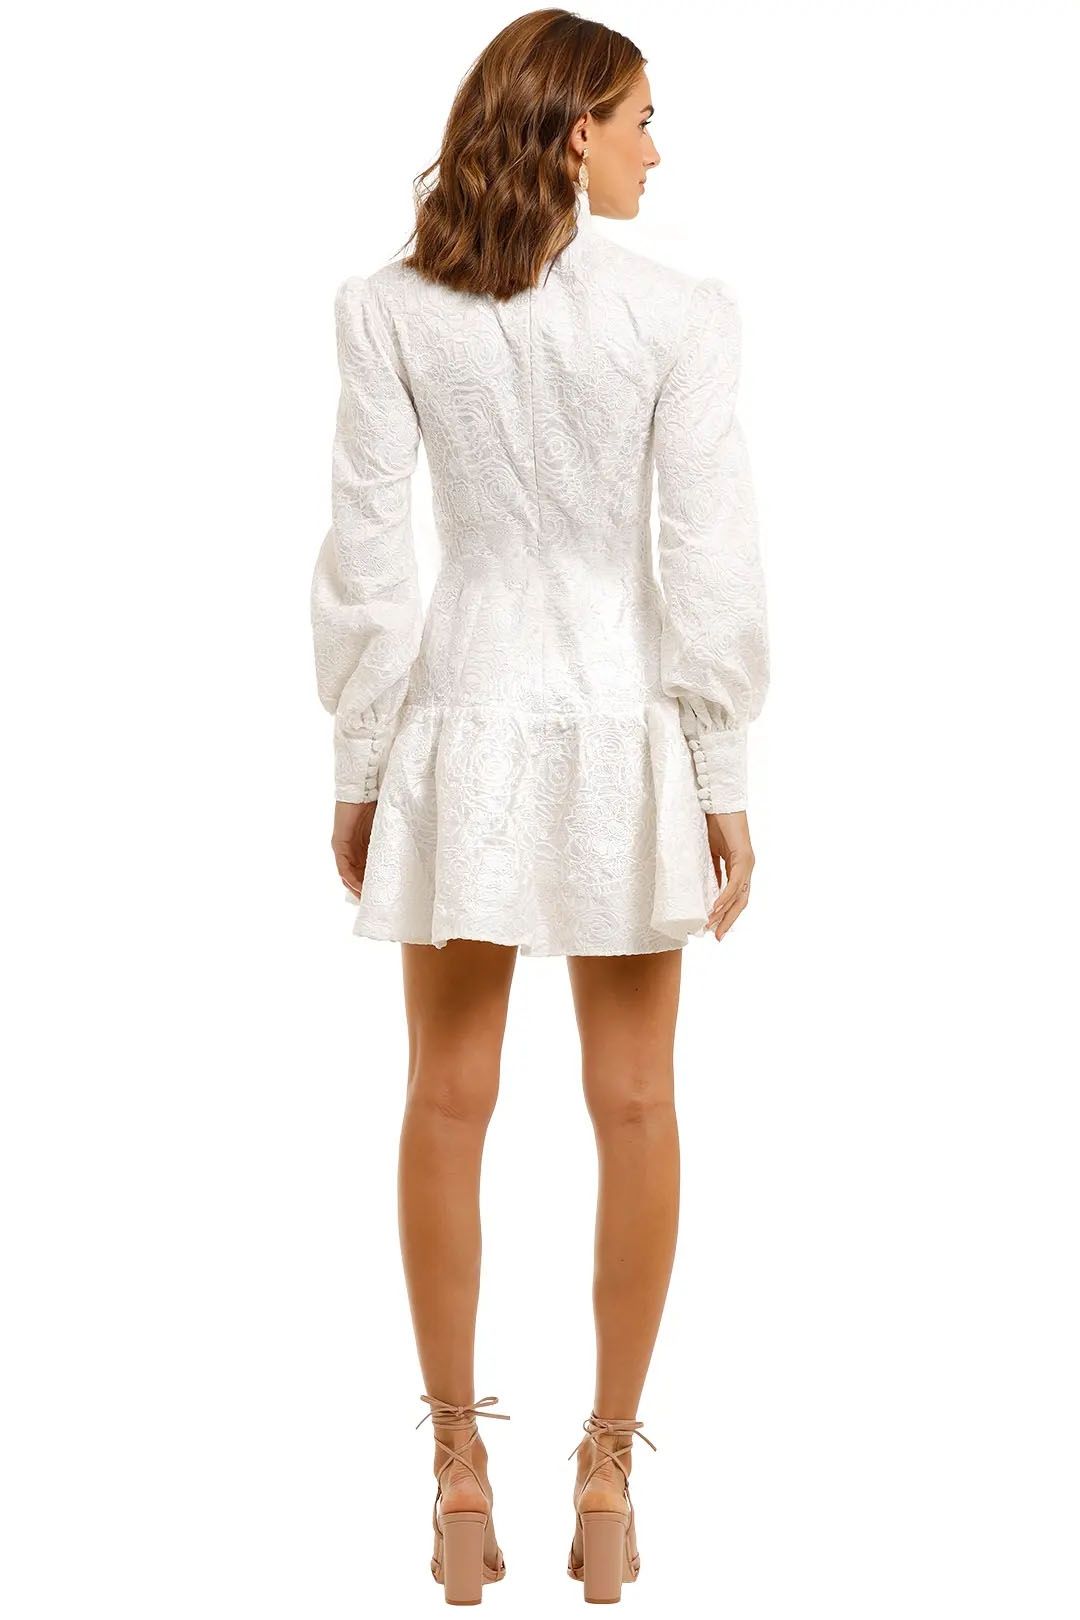 LEO & LIN Transcendence Rose Lace Short Dress White Blouson Sleeve No Belt